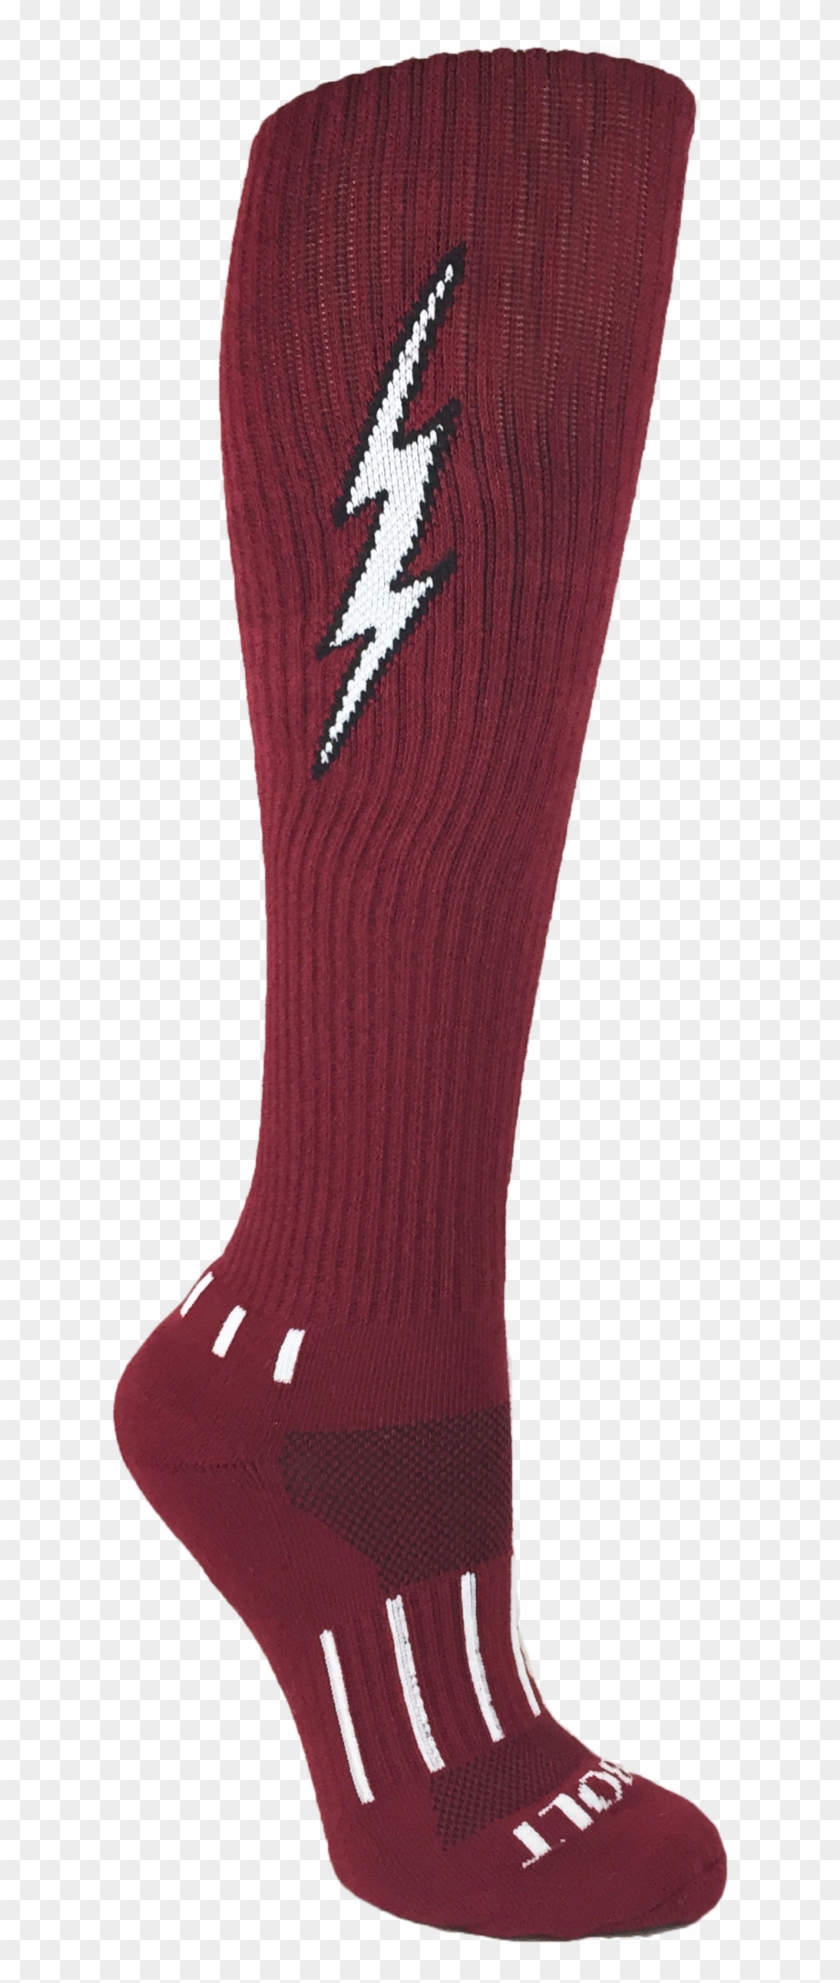 Maroon With Black Knee-high Insane Bolt - Hockey Sock Clipart #4940350